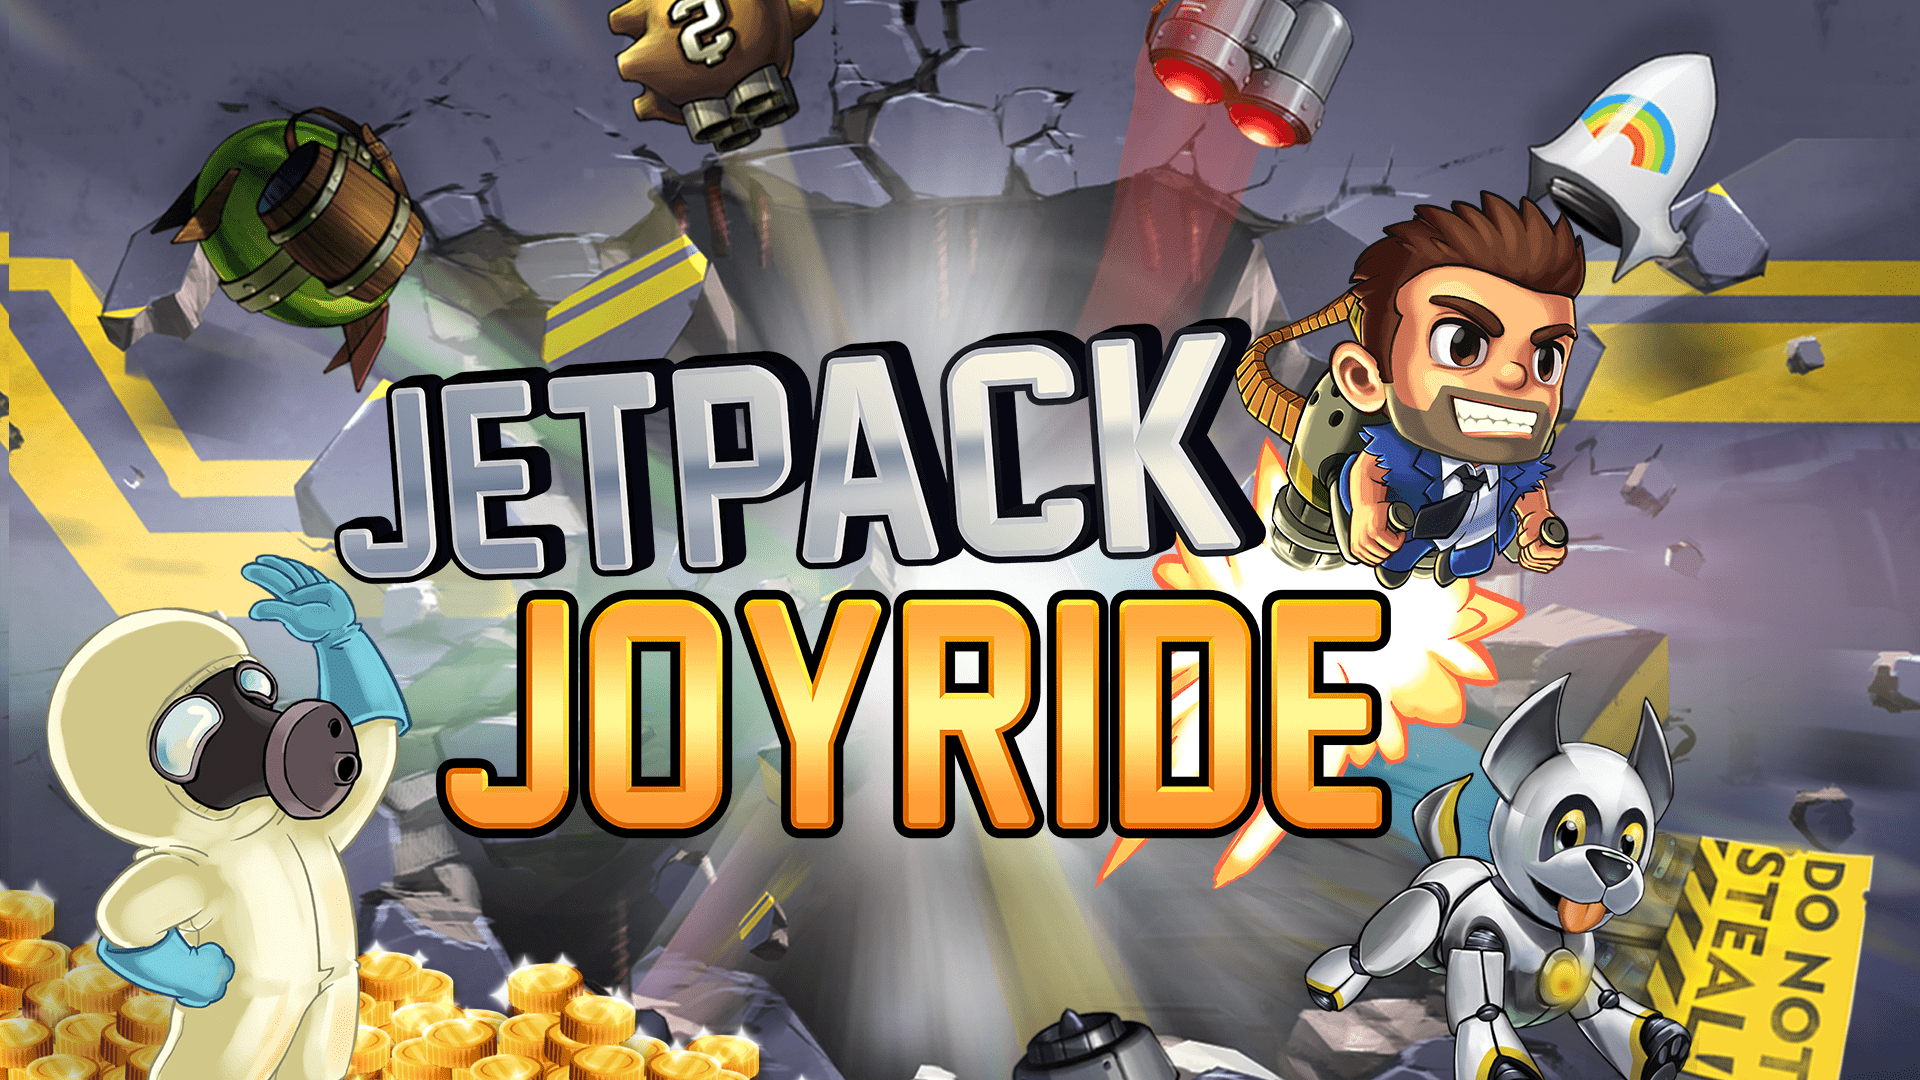 Jetpack Joyride Wallpapers - Top Free Jetpack Joyride Backgrounds ...